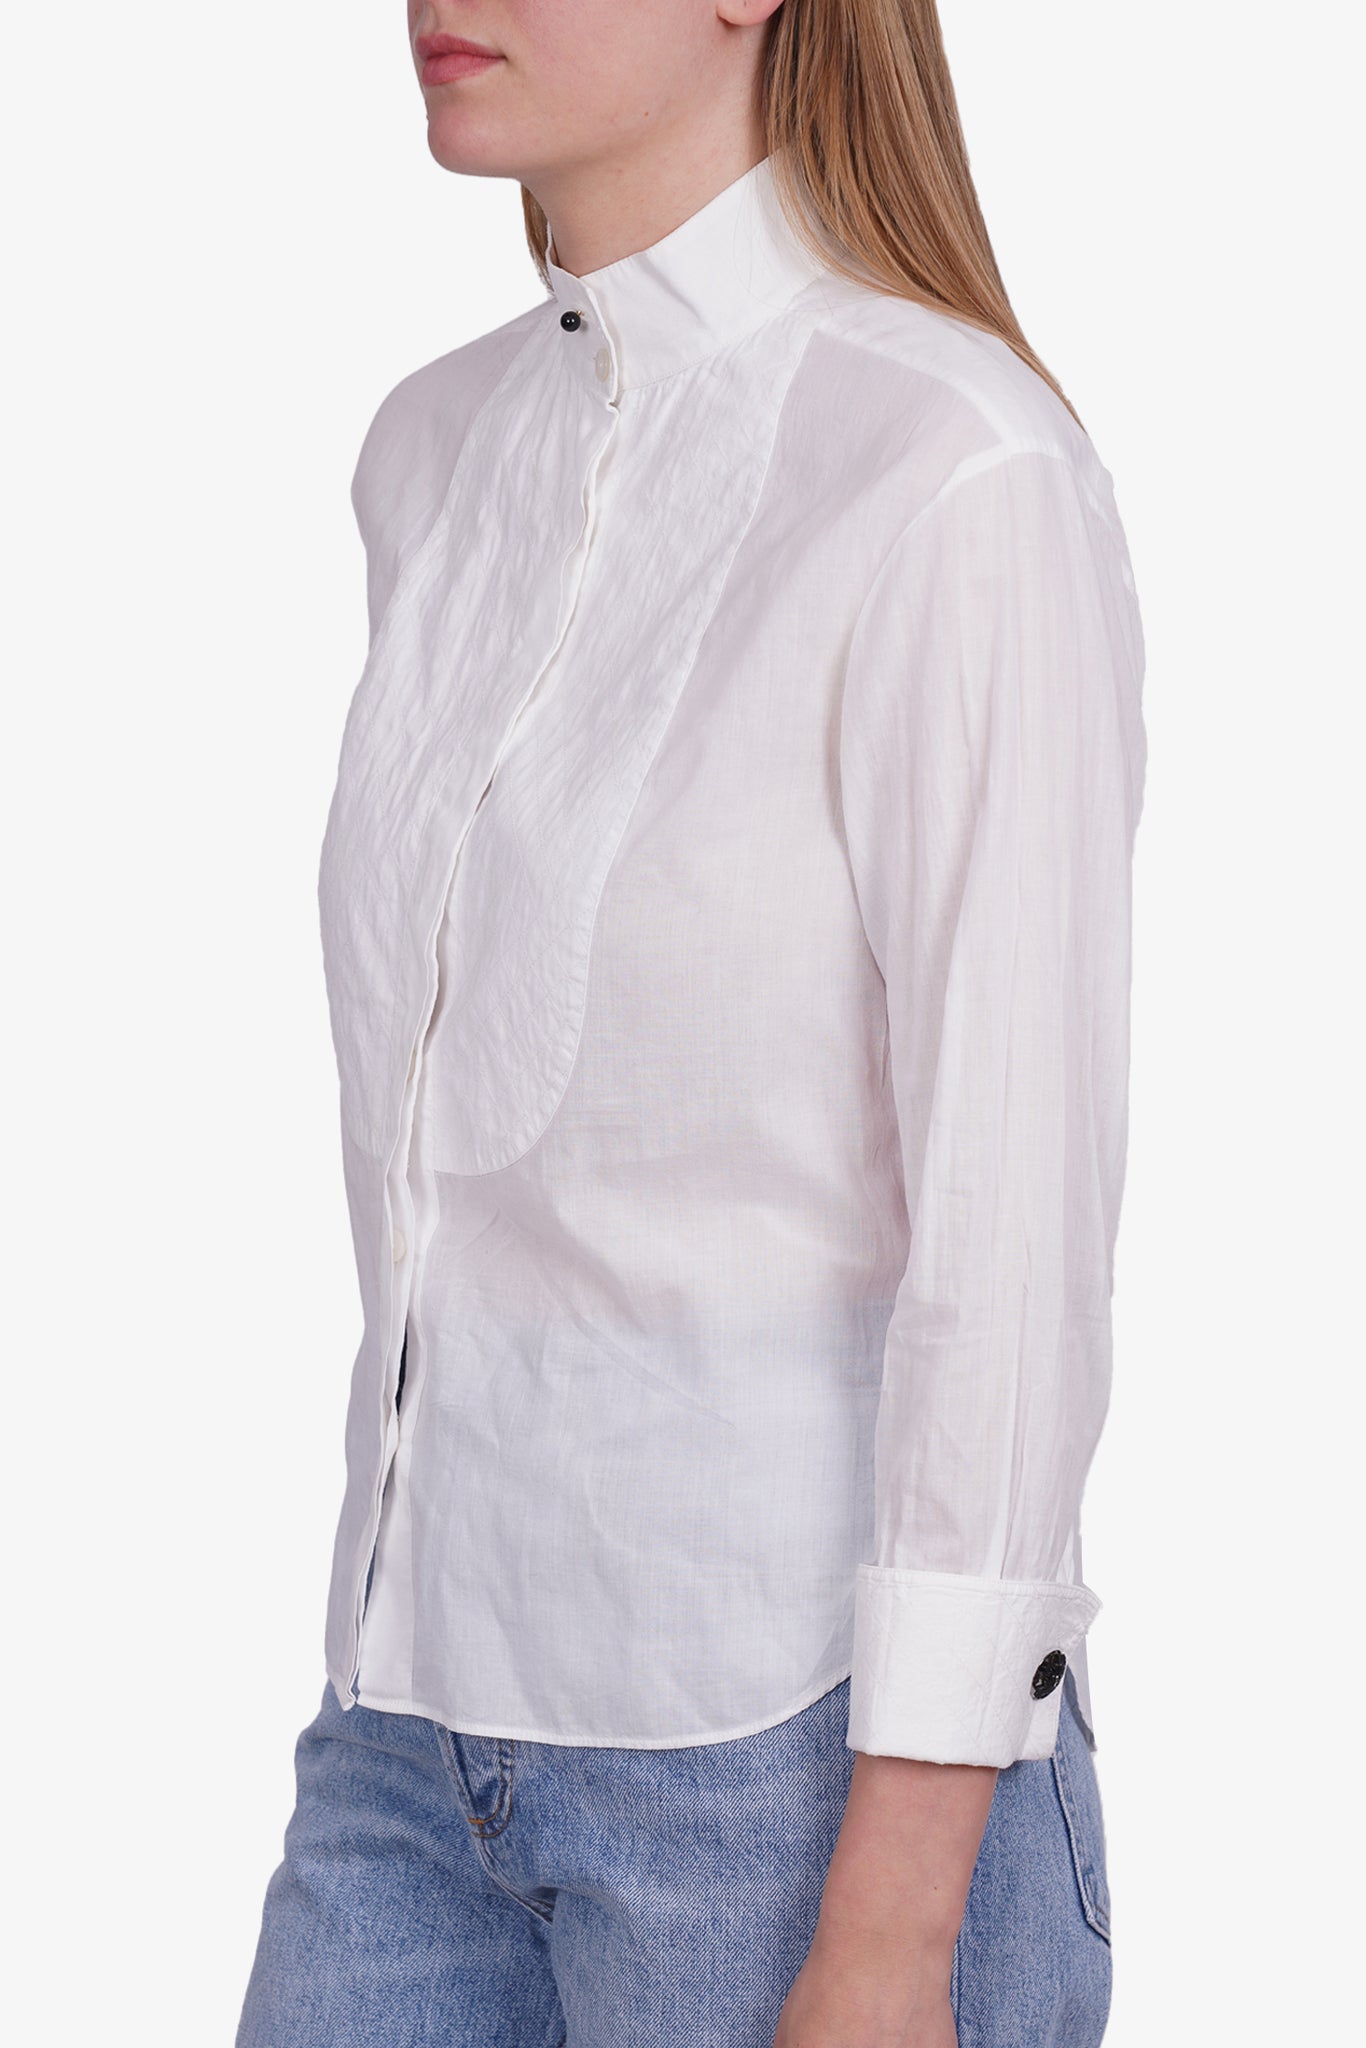 Calvin Klein Men's Dress Shirt Slim Fit Refined Cotton Stretch